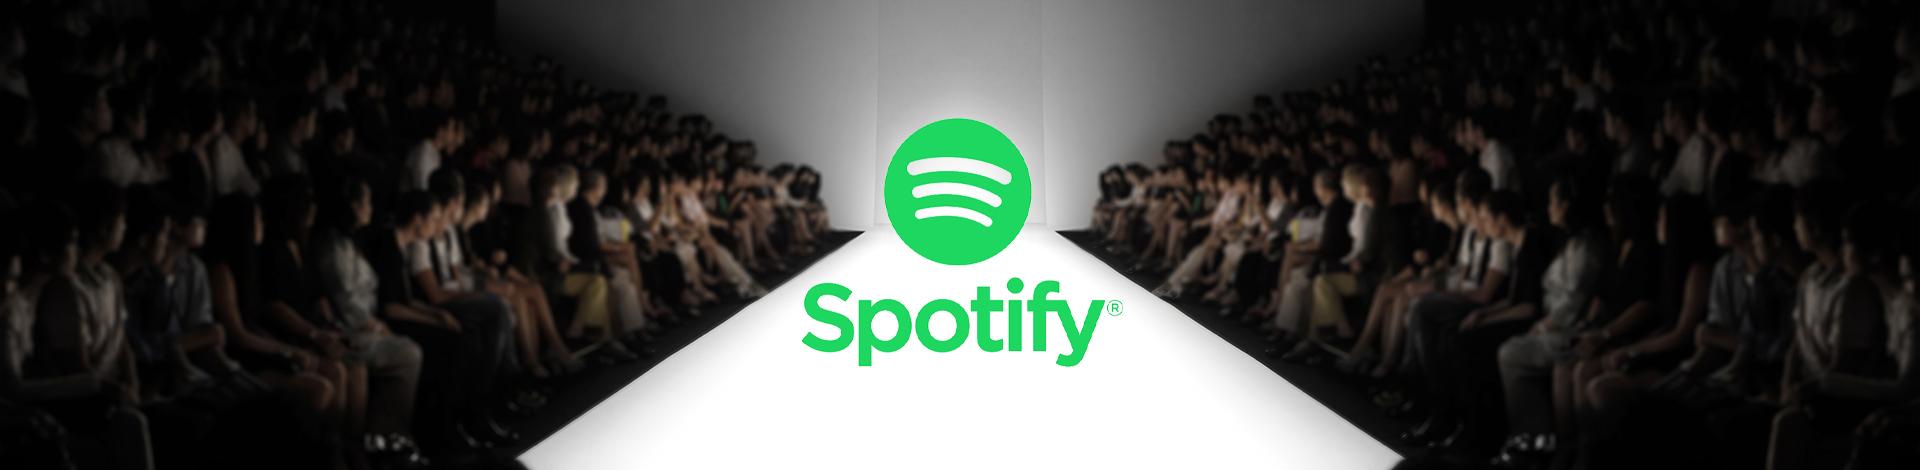 È Spotify mania